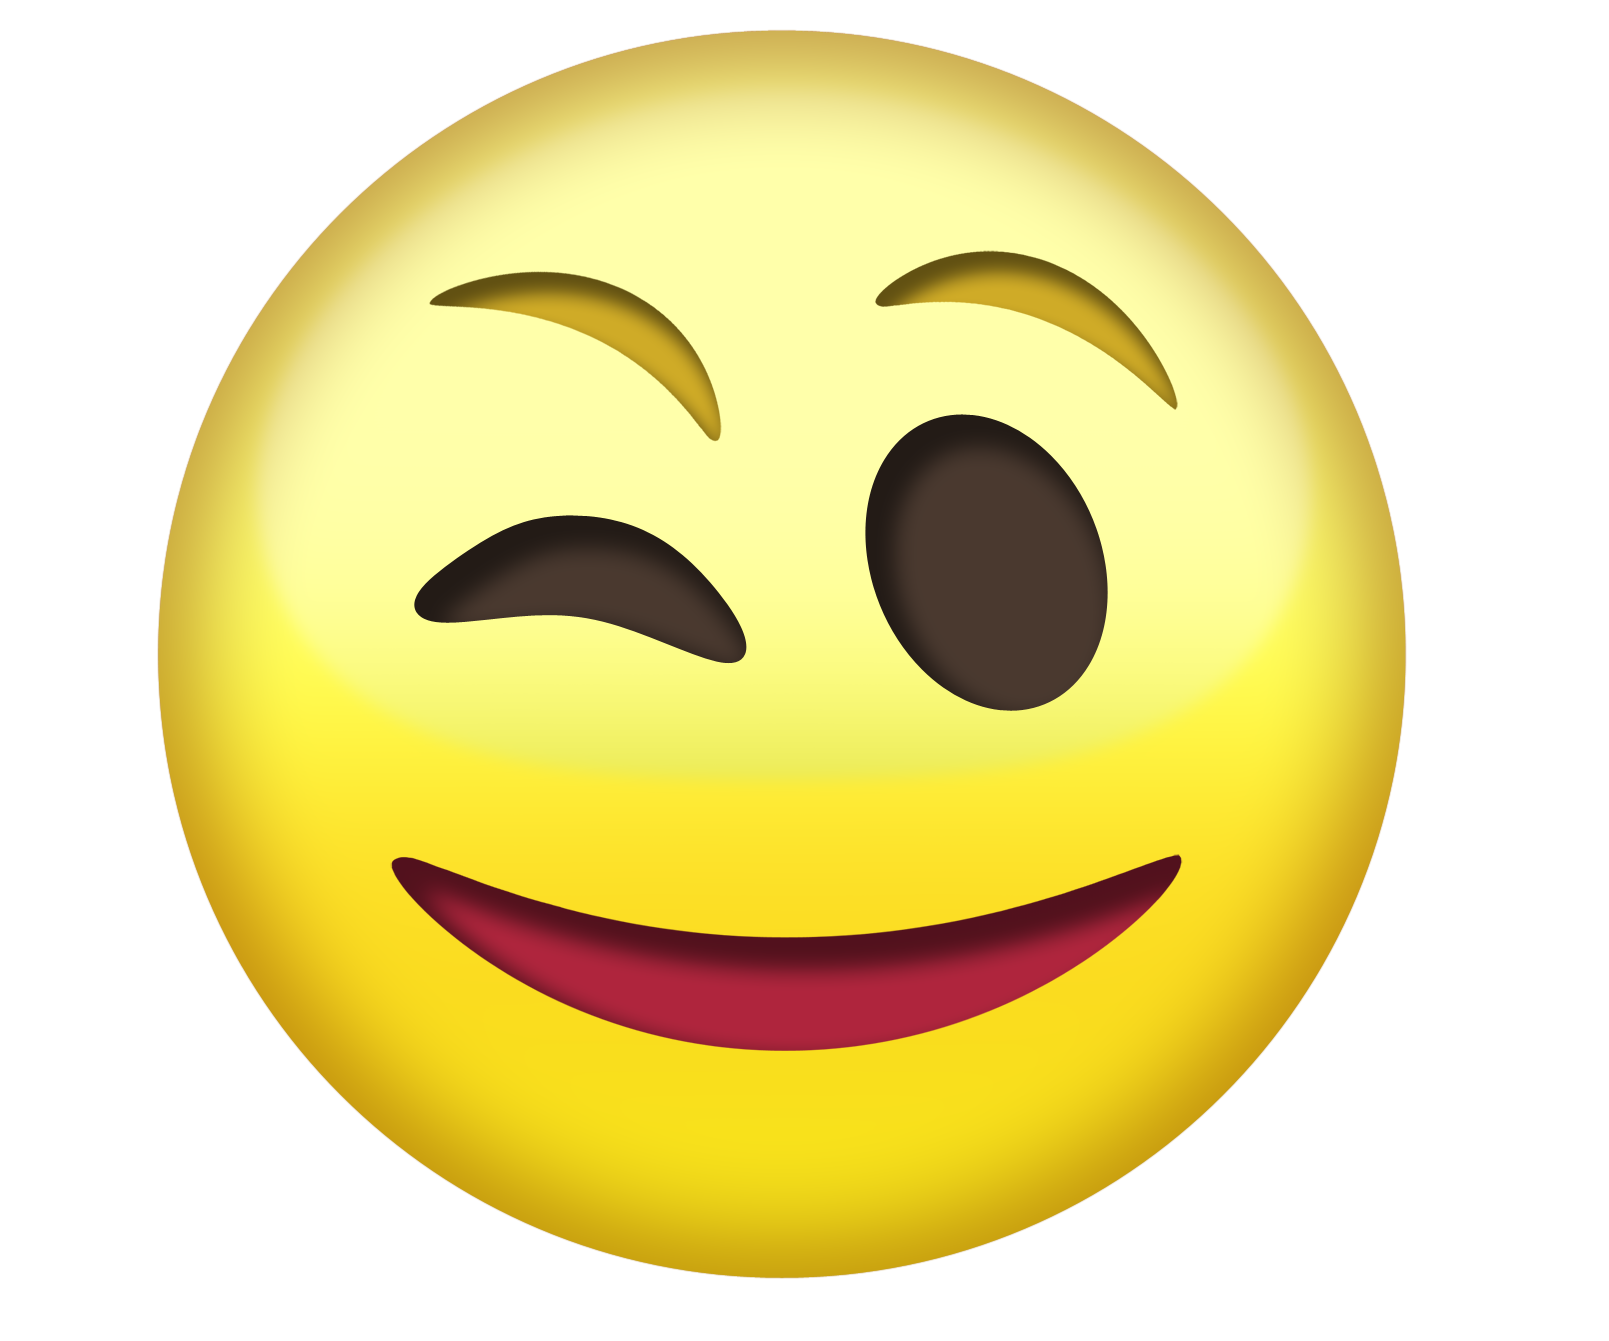 Emoji Head PNG Transparent Image